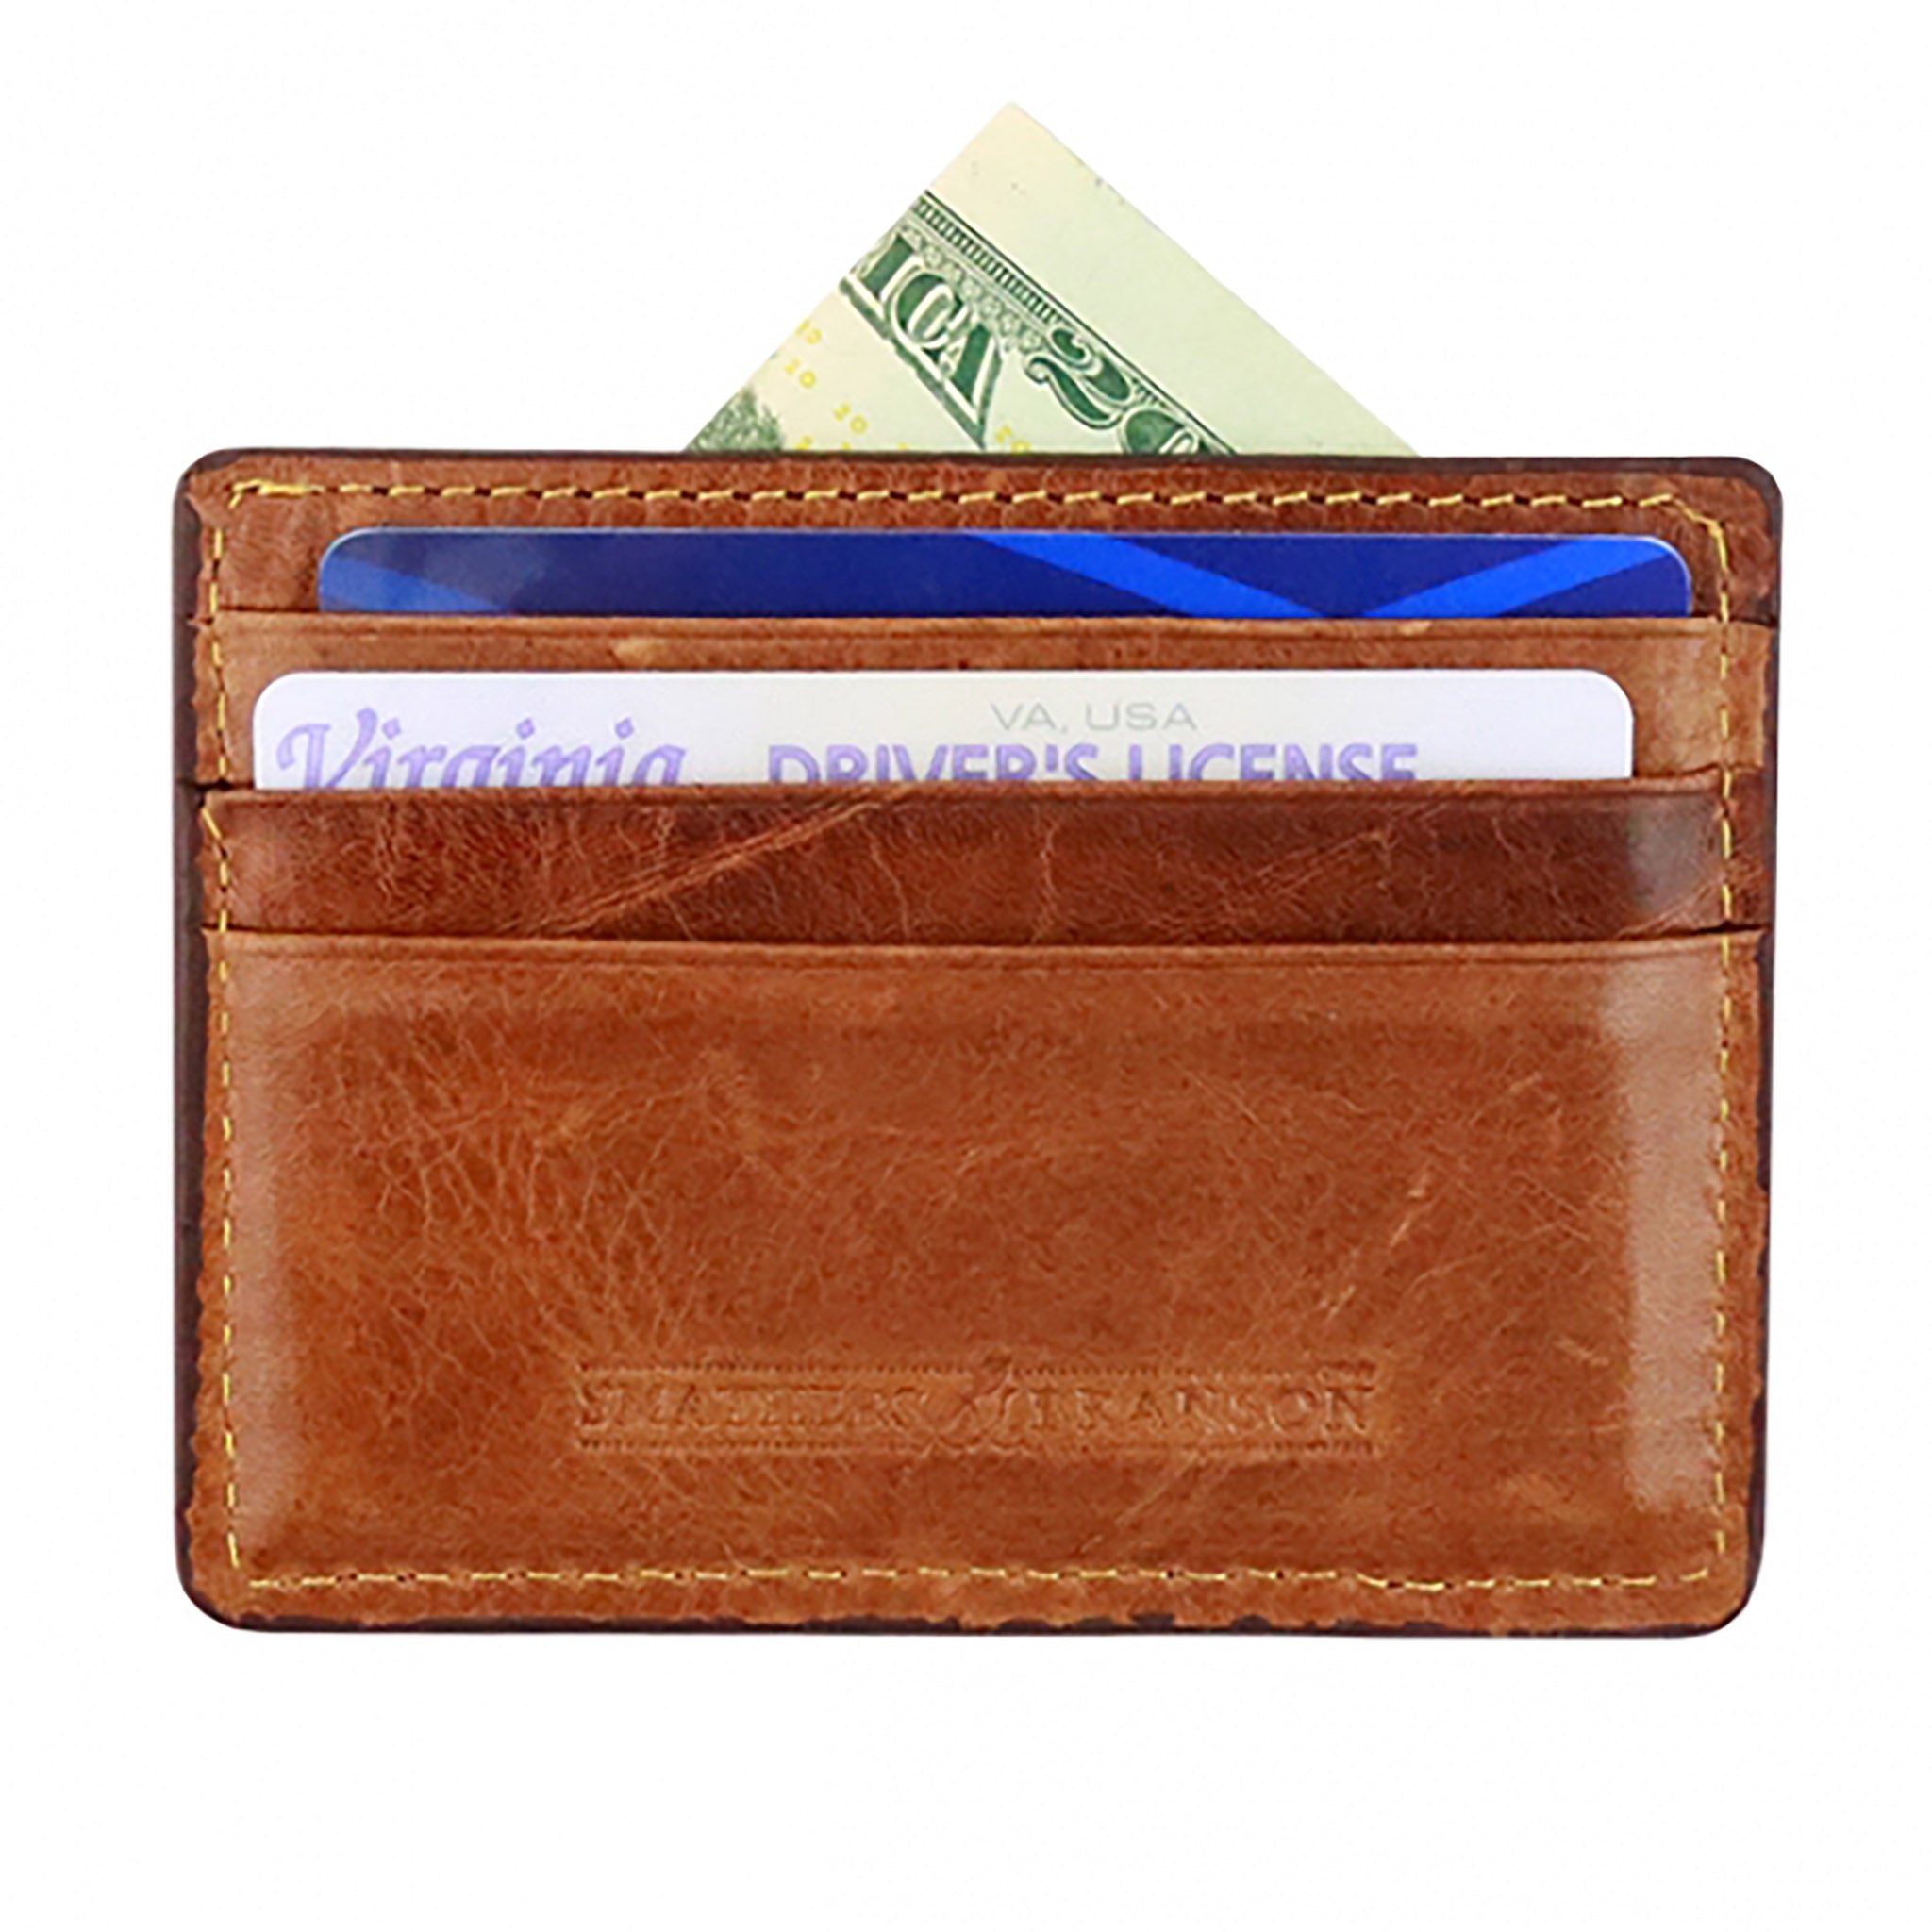 James Madison Card Wallet (Royal Purple)